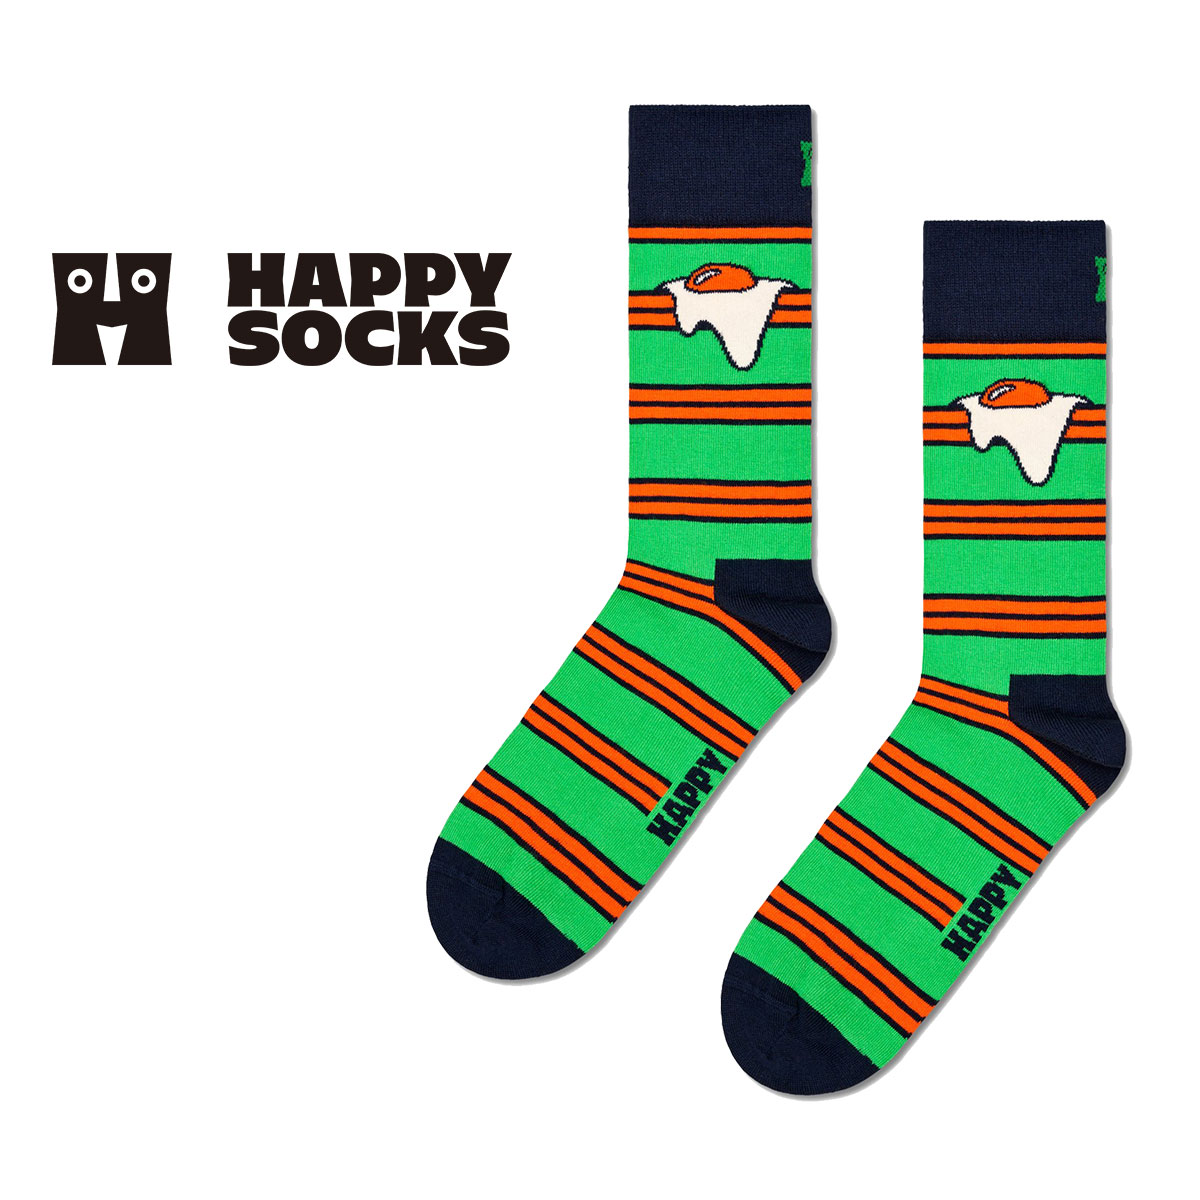 【24SS】Happy Socks ハッピーソックス Egg On Stripe ( エッグ オン ストライプ ) クルー丈 ソックス ユニセックス メンズ ＆ レディス 10240080